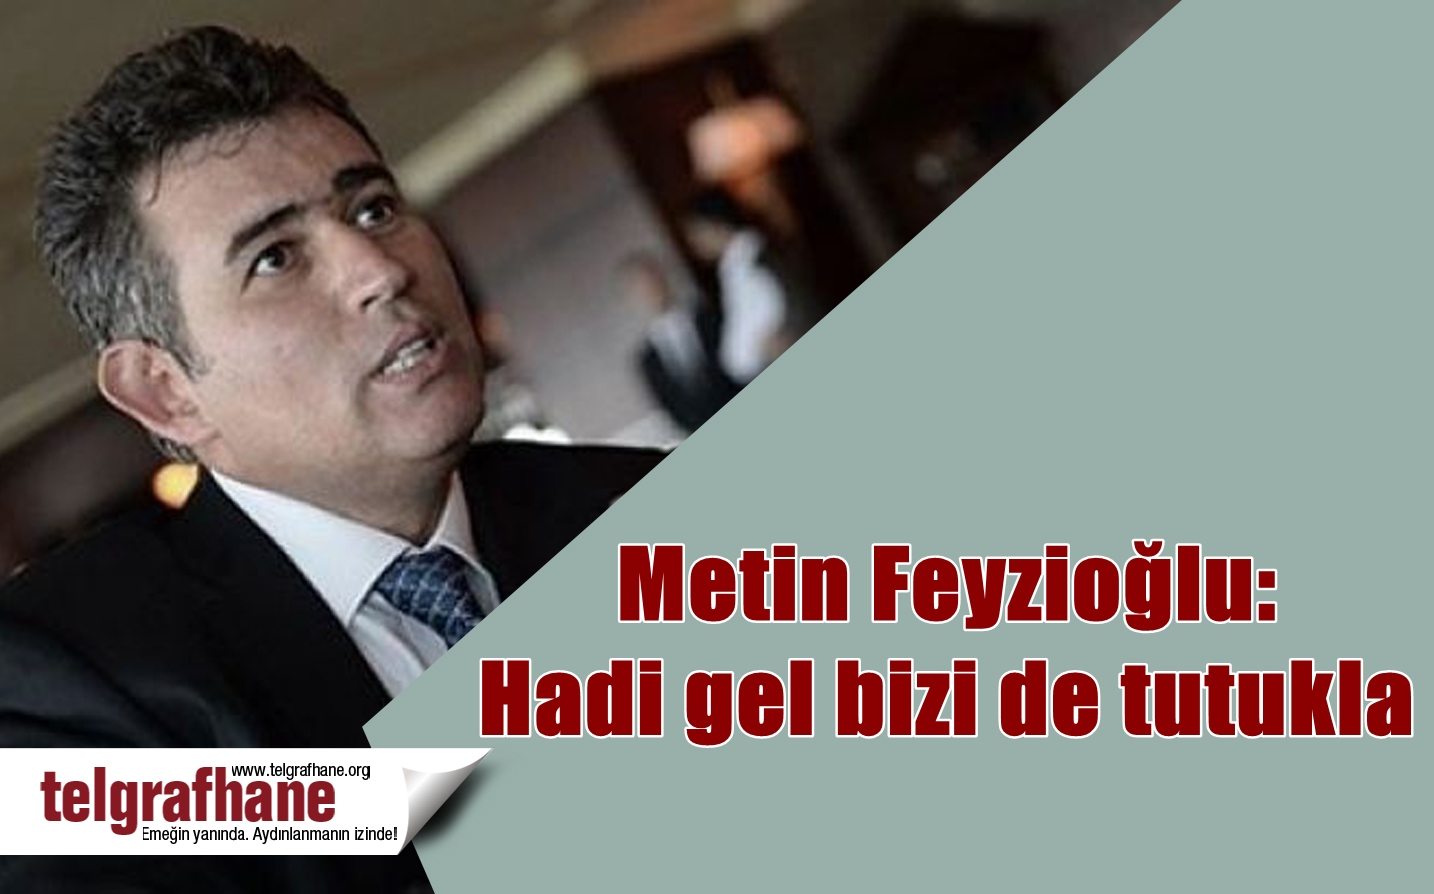 Metin Feyzioğlu: Hadi gel bizi de tutukla